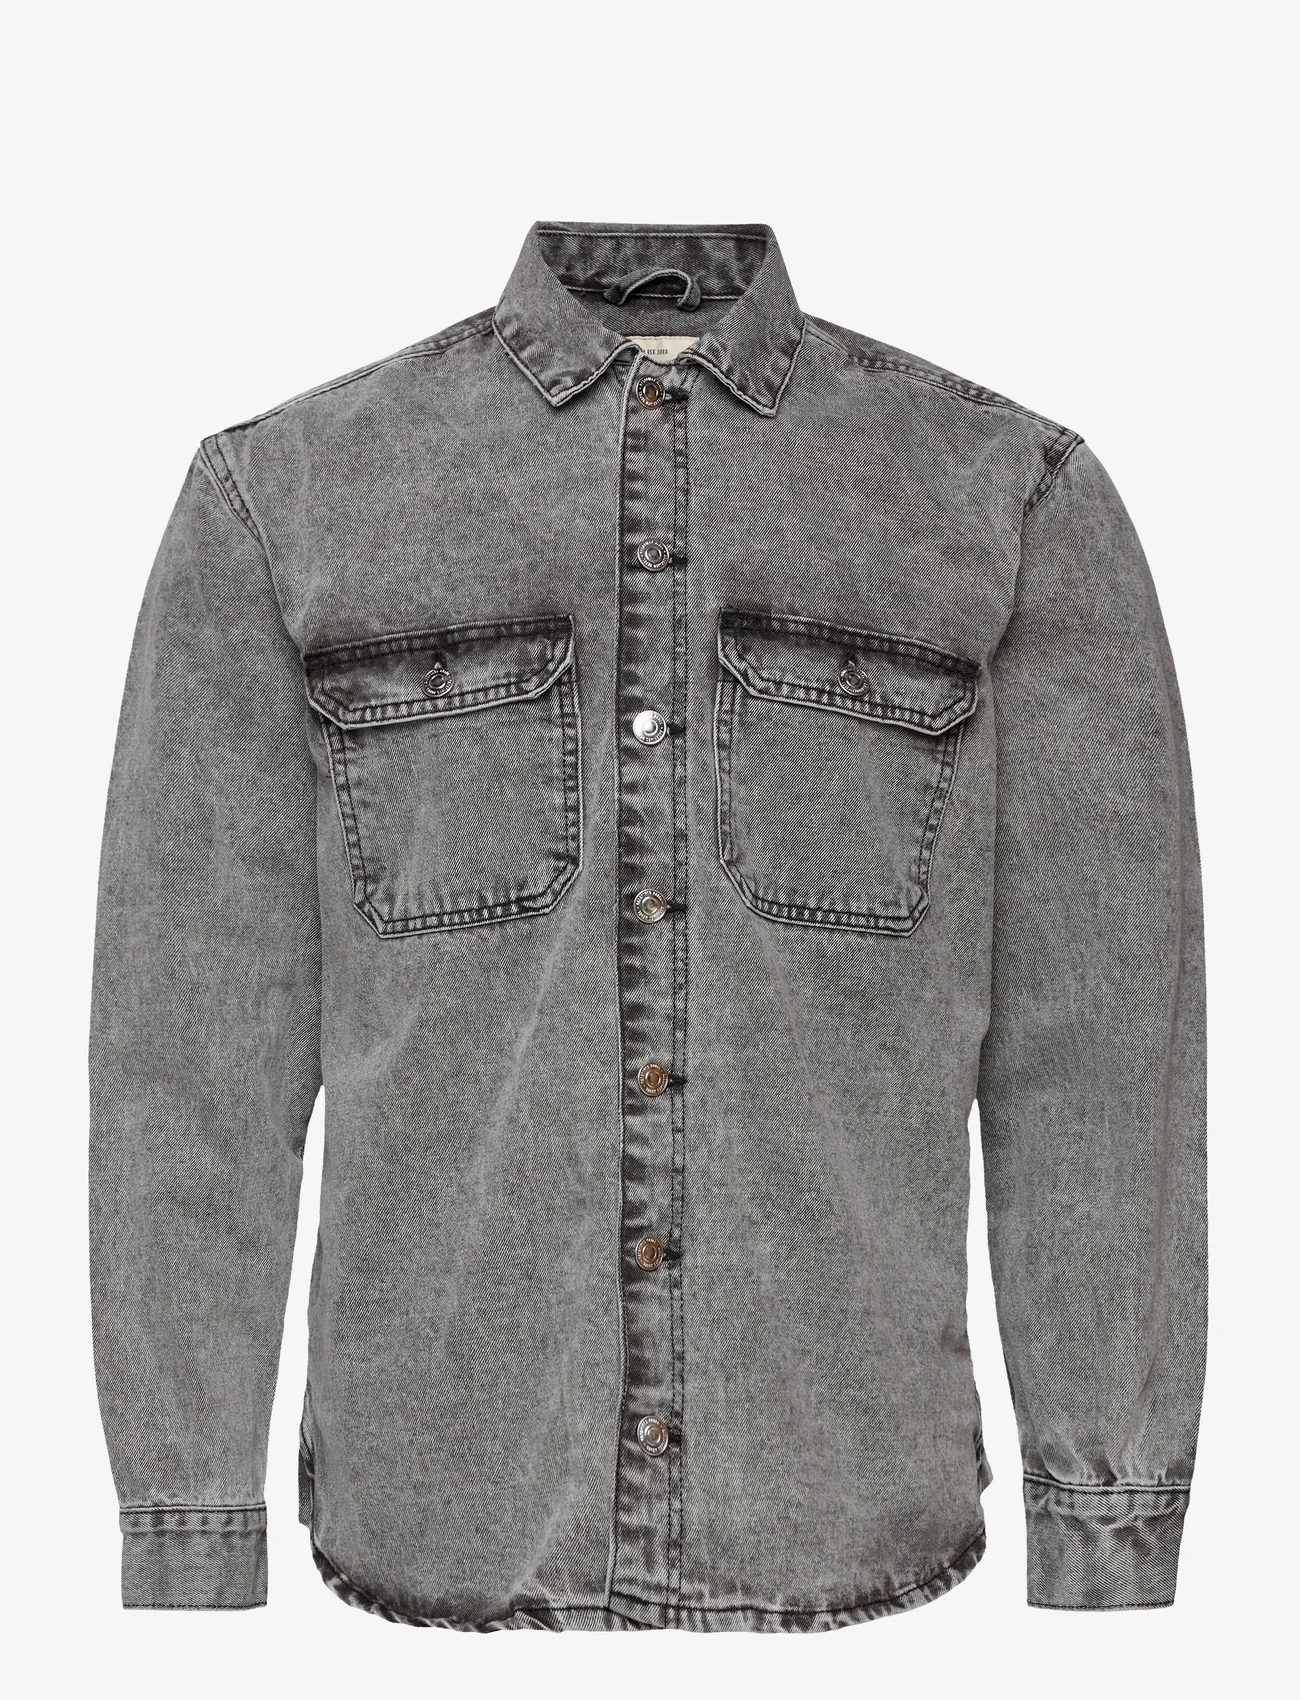 Redefined Rebel - RRNixon Shirt - nordic style - light grey - 1